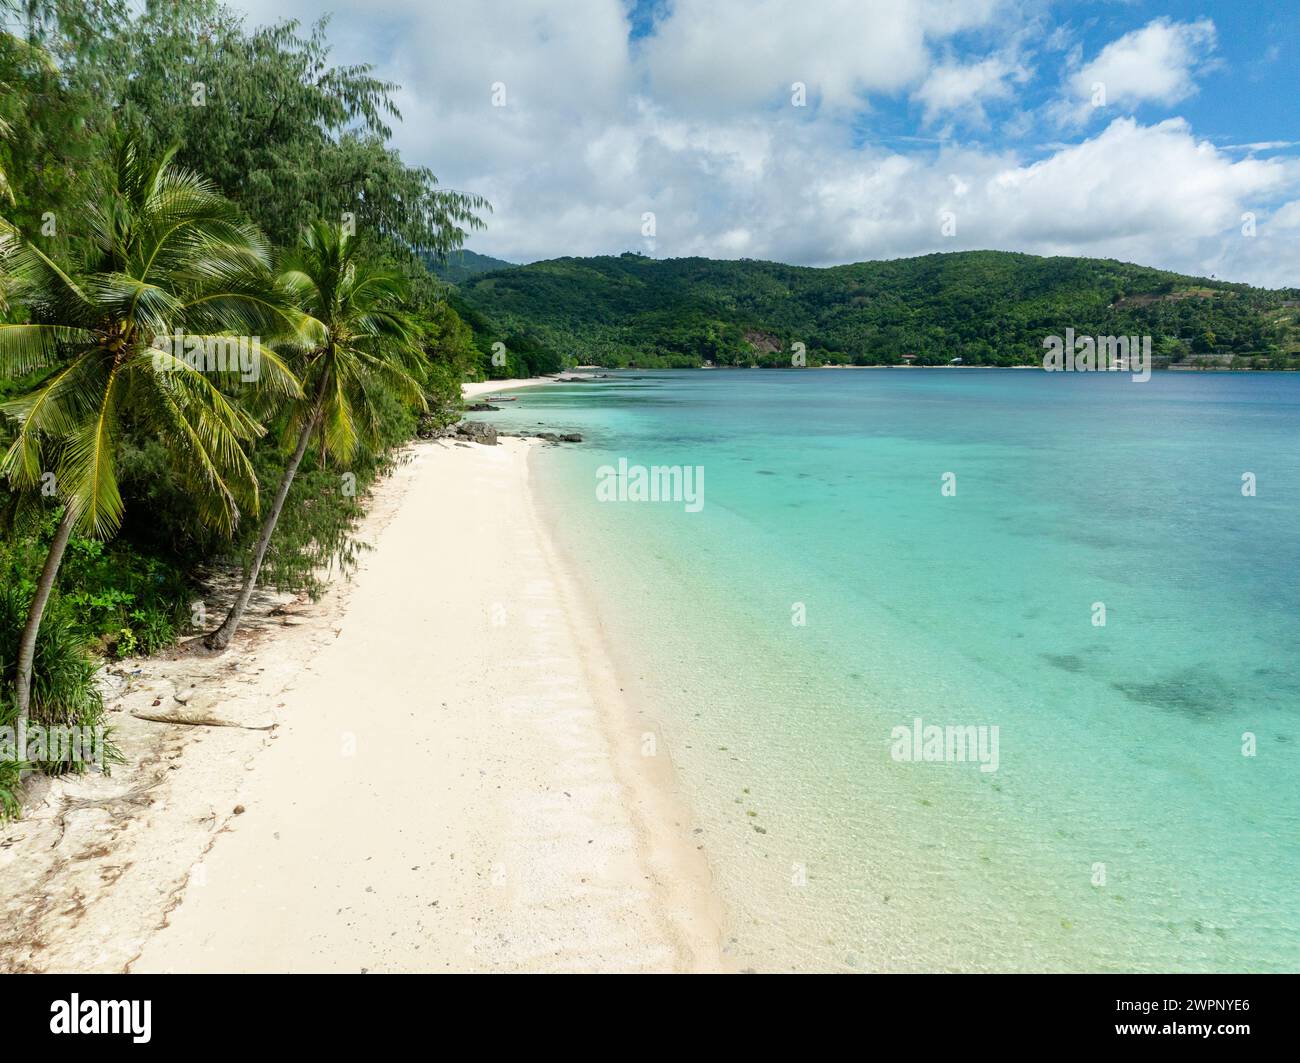 Coconut trees in white sandy beach with waves. Romblon Island. Romblon, Philippines. Stock Photo